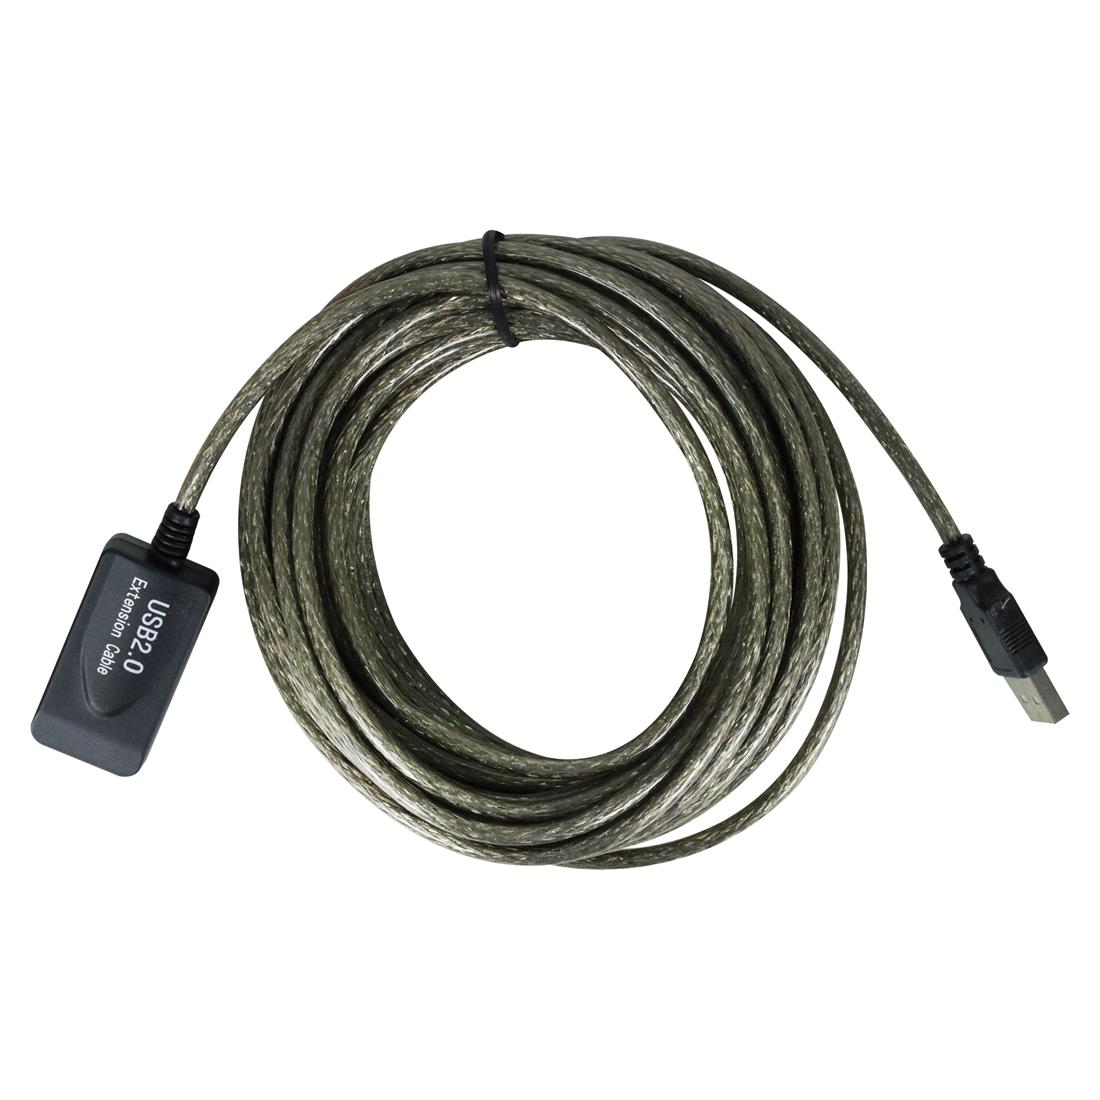 Comprar Cable USB A Macho a USB A Hembra Activo 10 metros Online - Sonicolor